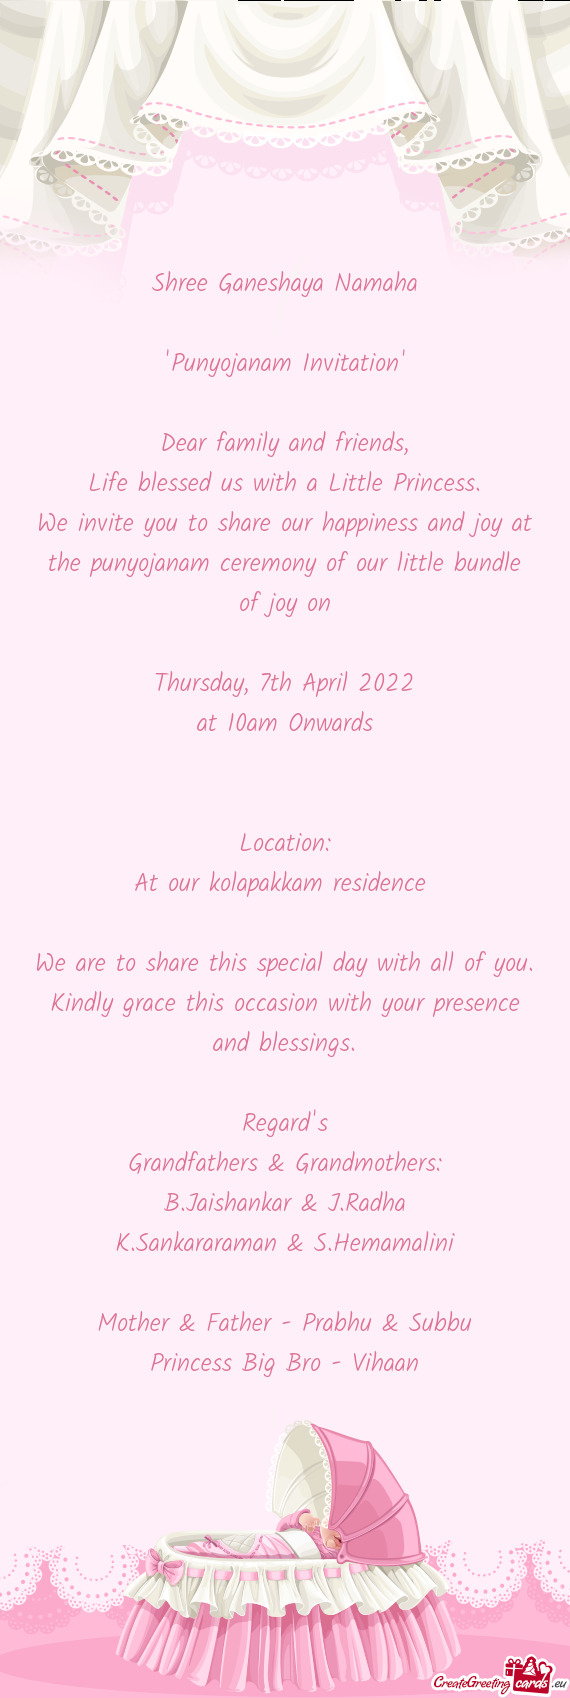 "Punyojanam Invitation"